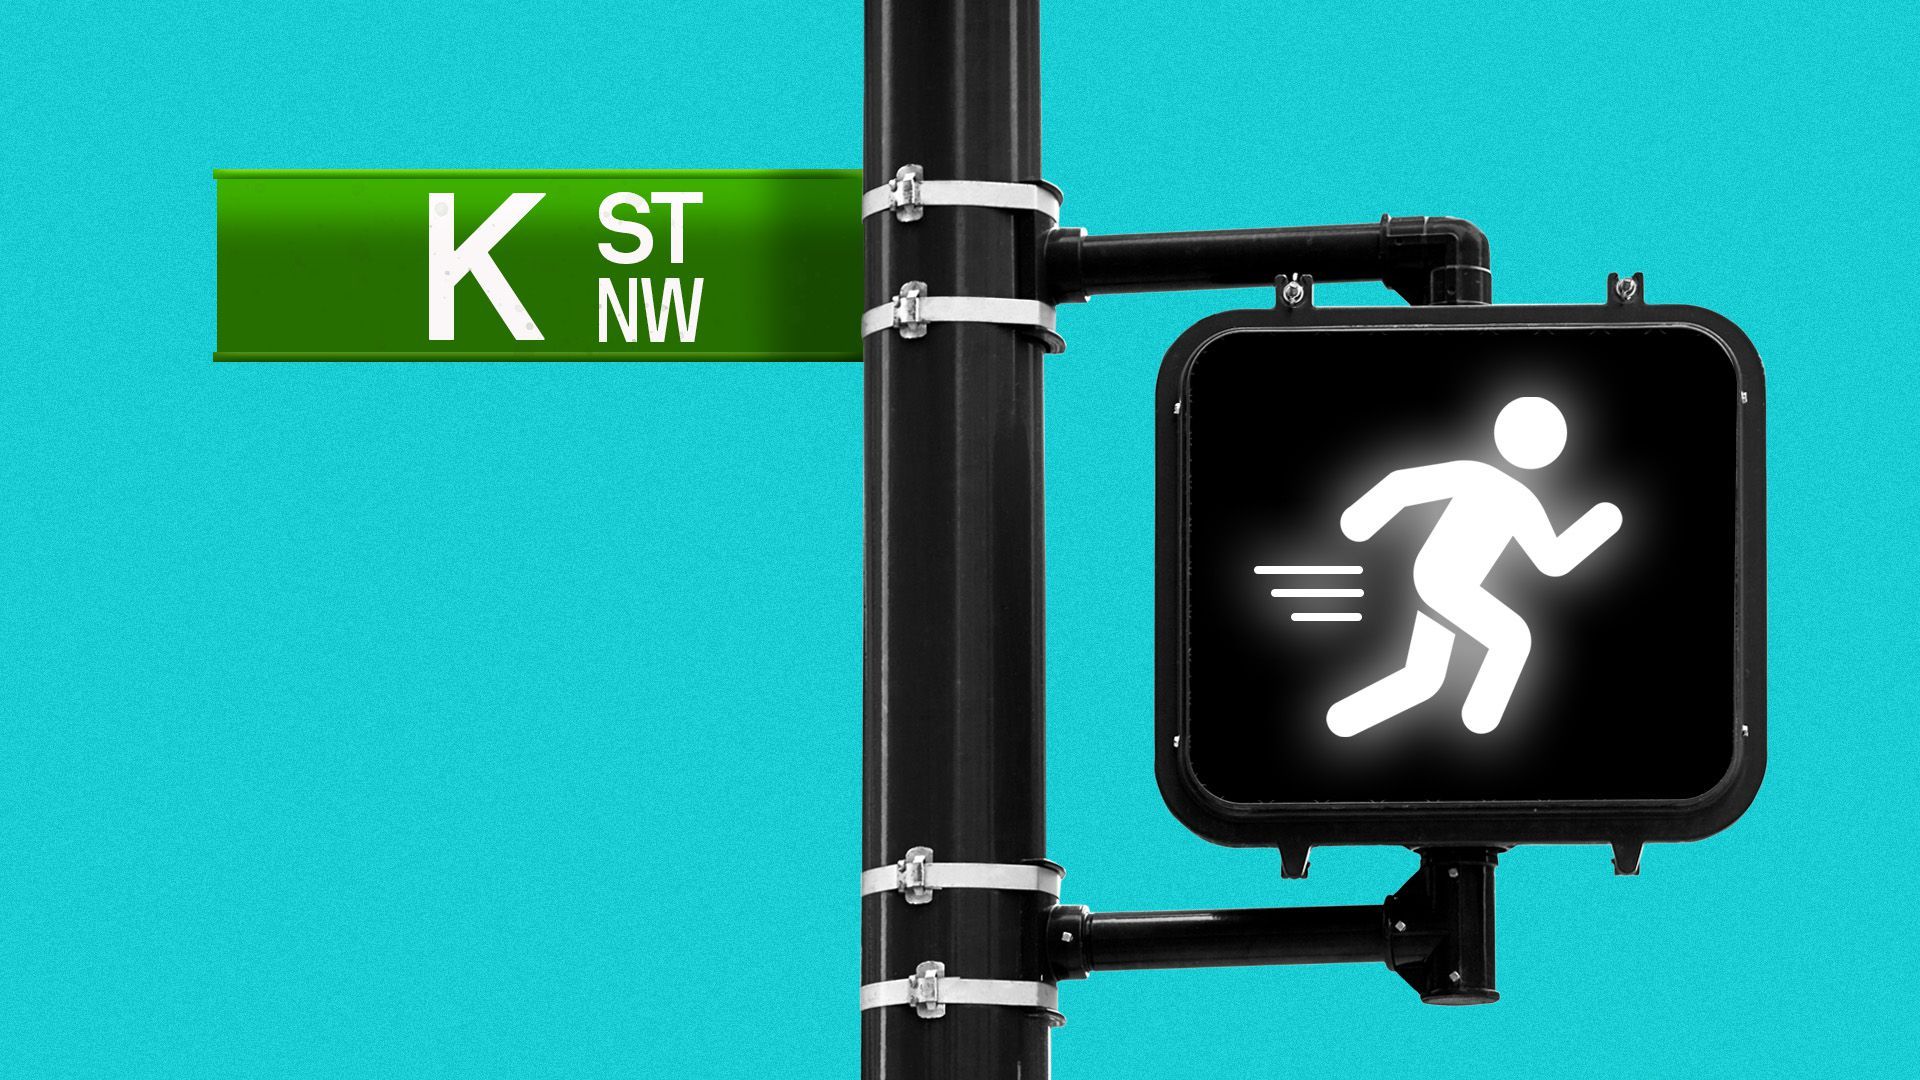 Illustration of a K Street street sign with a running pedestrian logo